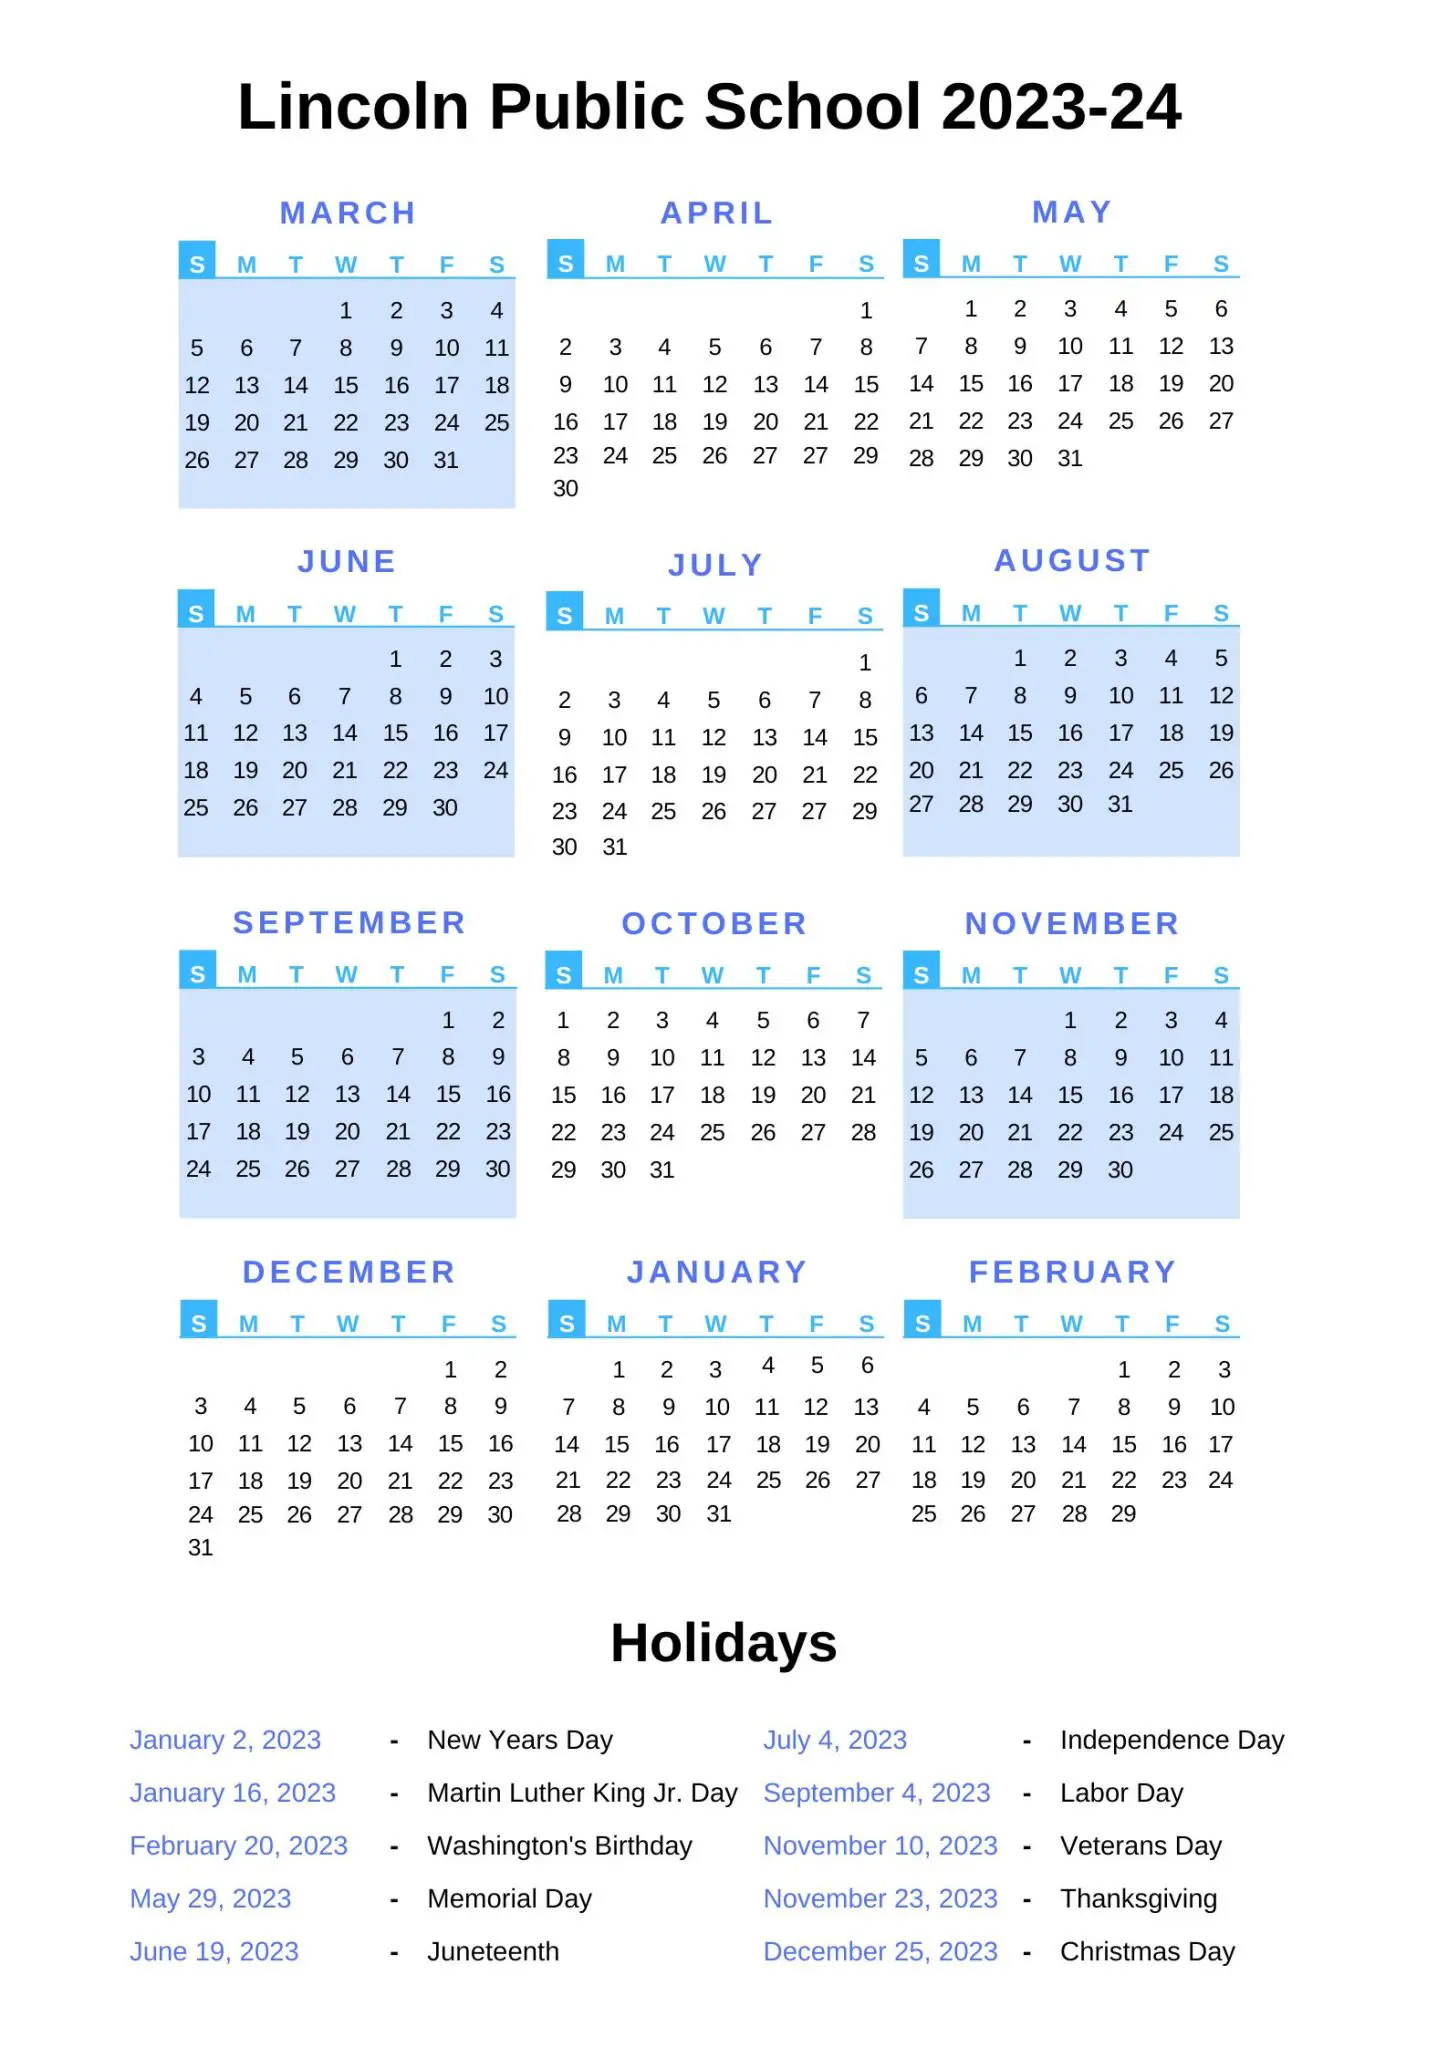 Lincoln Public Schools Calendar 202324 With Holidays